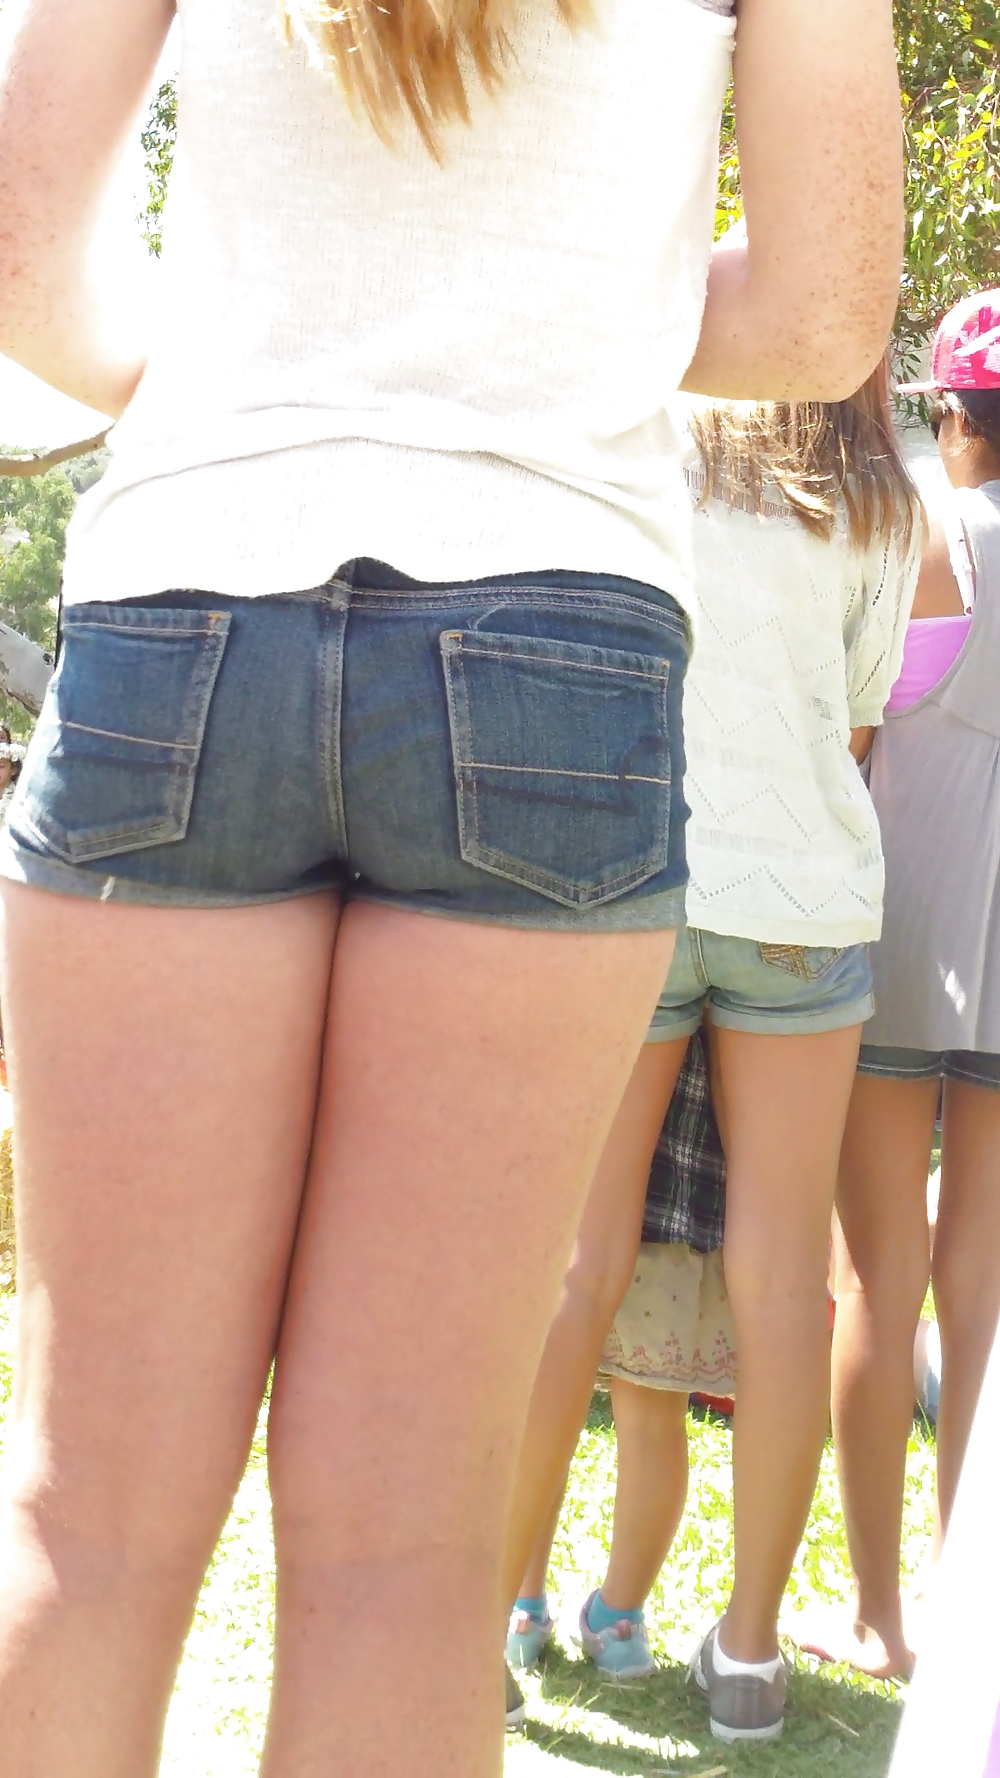 Some nice public butt cracks & ass cheeks in shorts  #21359196